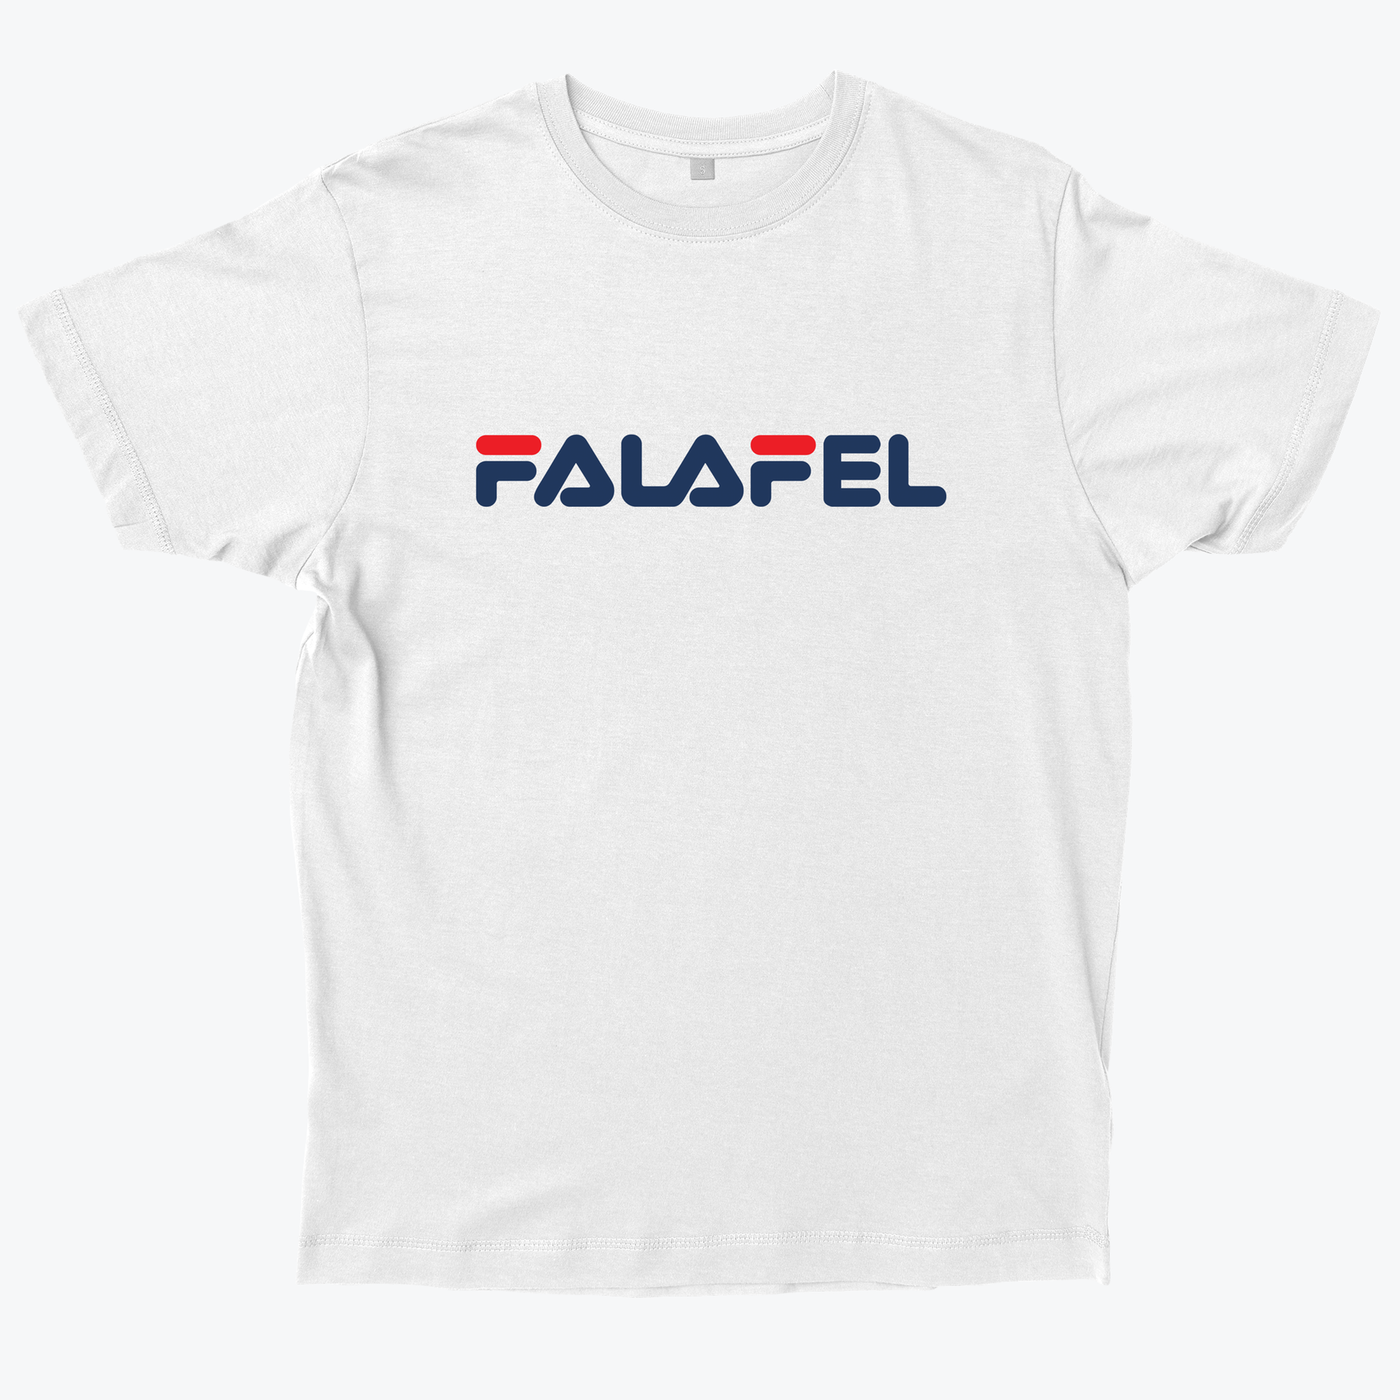 Ahmed Badenjki's 'Falafel' T-shirt